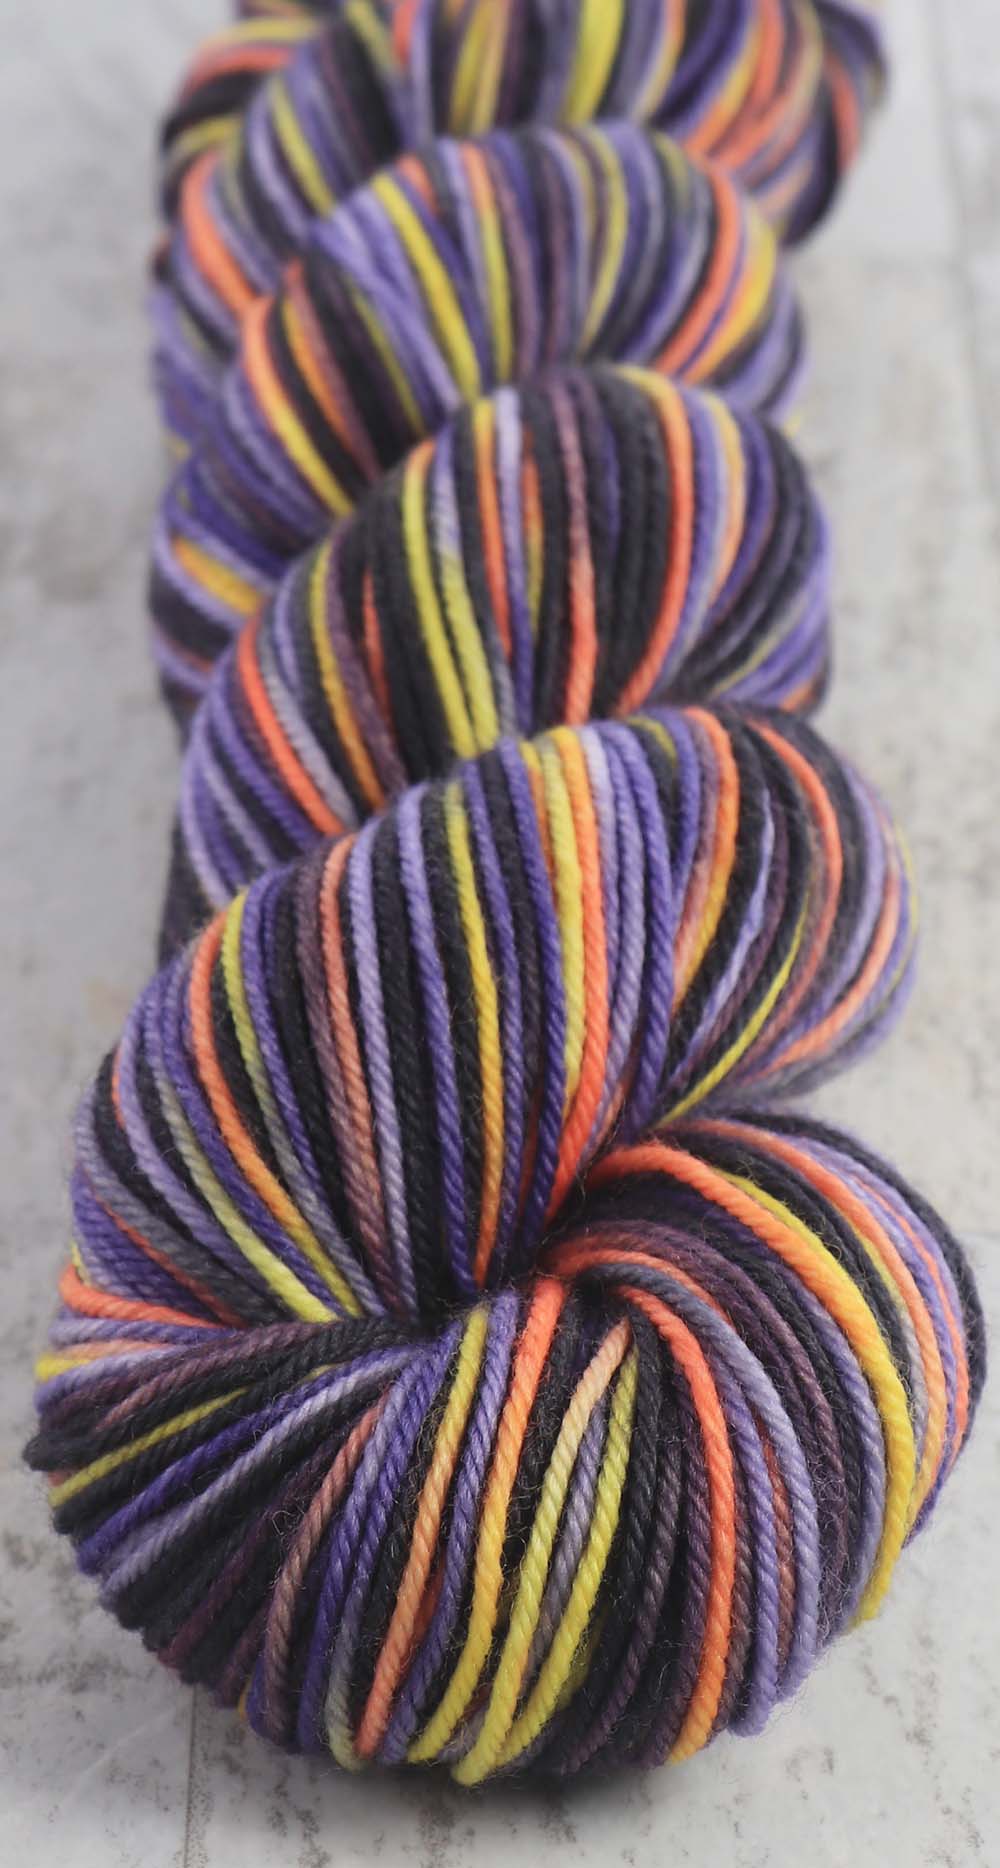 BALI HAI AT DUSK: SW Merino/Cashmere/Nylon - Hand dyed Variegated sock yarn